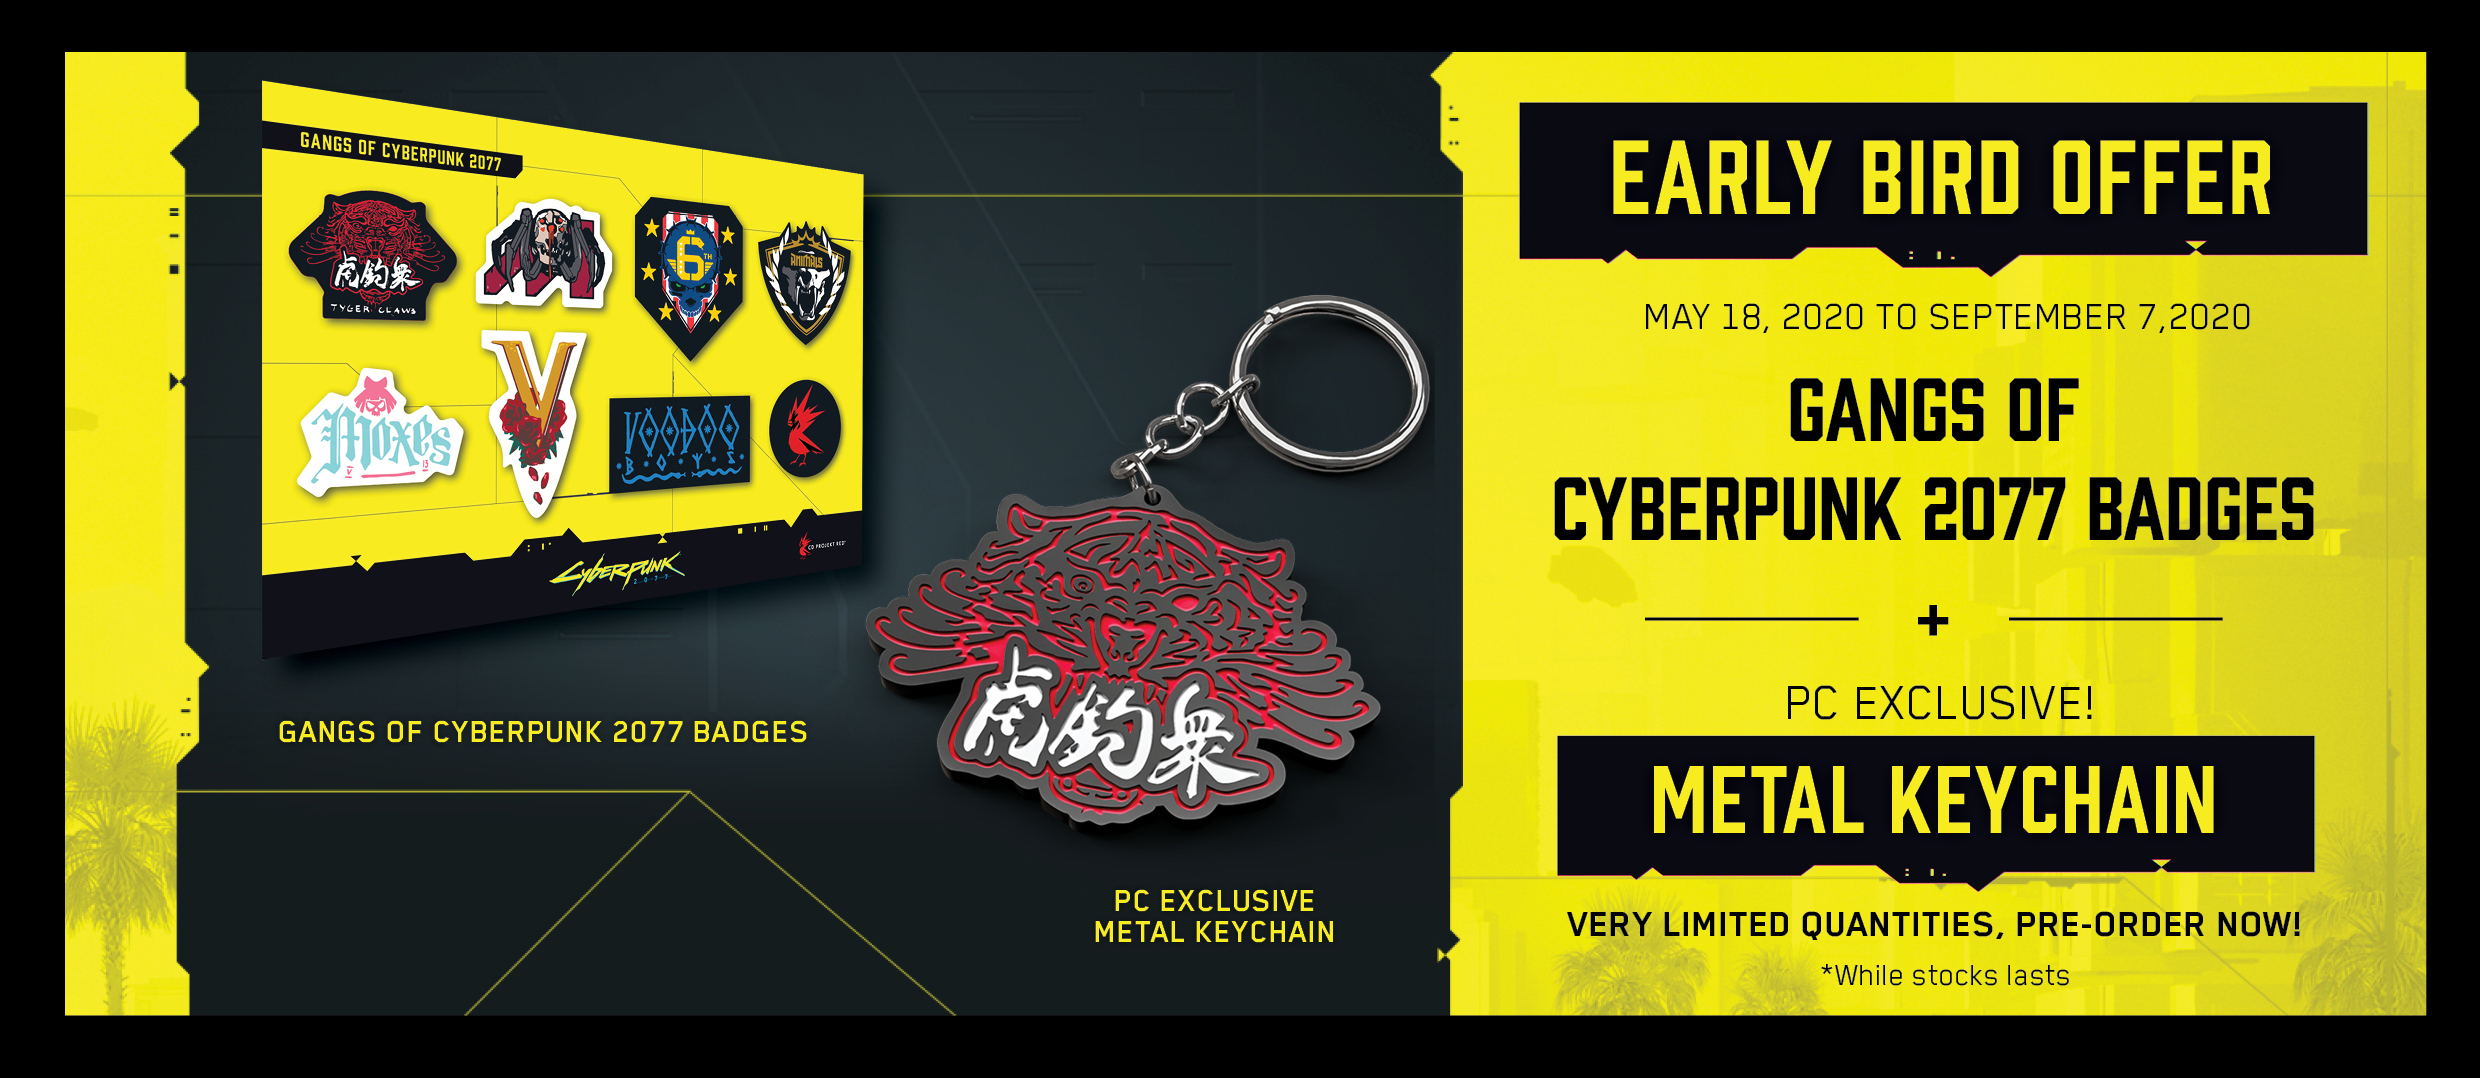 Epicsoft Asia Promotion Cyberpunk 2077 Standard PC Early Bird Offer